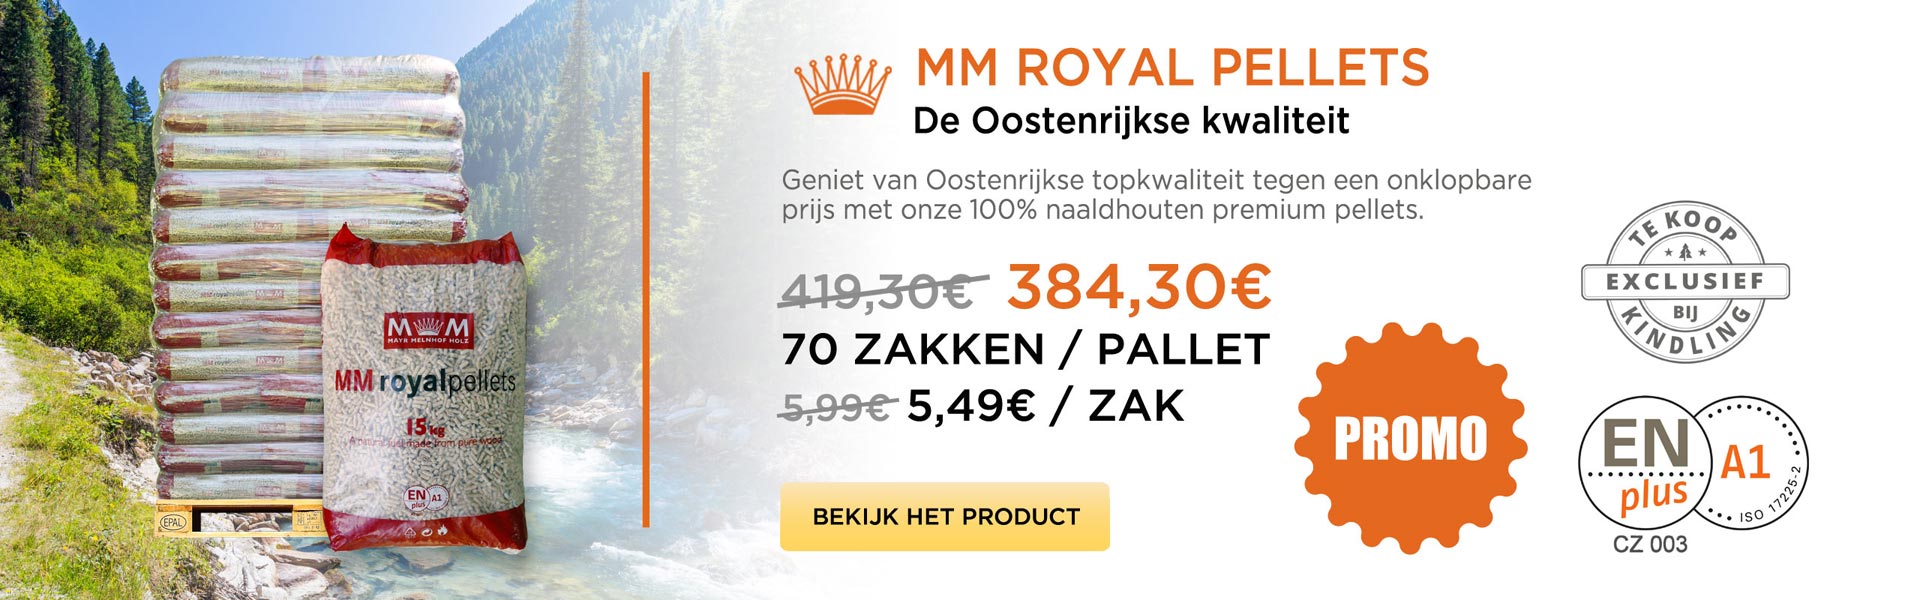 royal-pellets-promo-nl